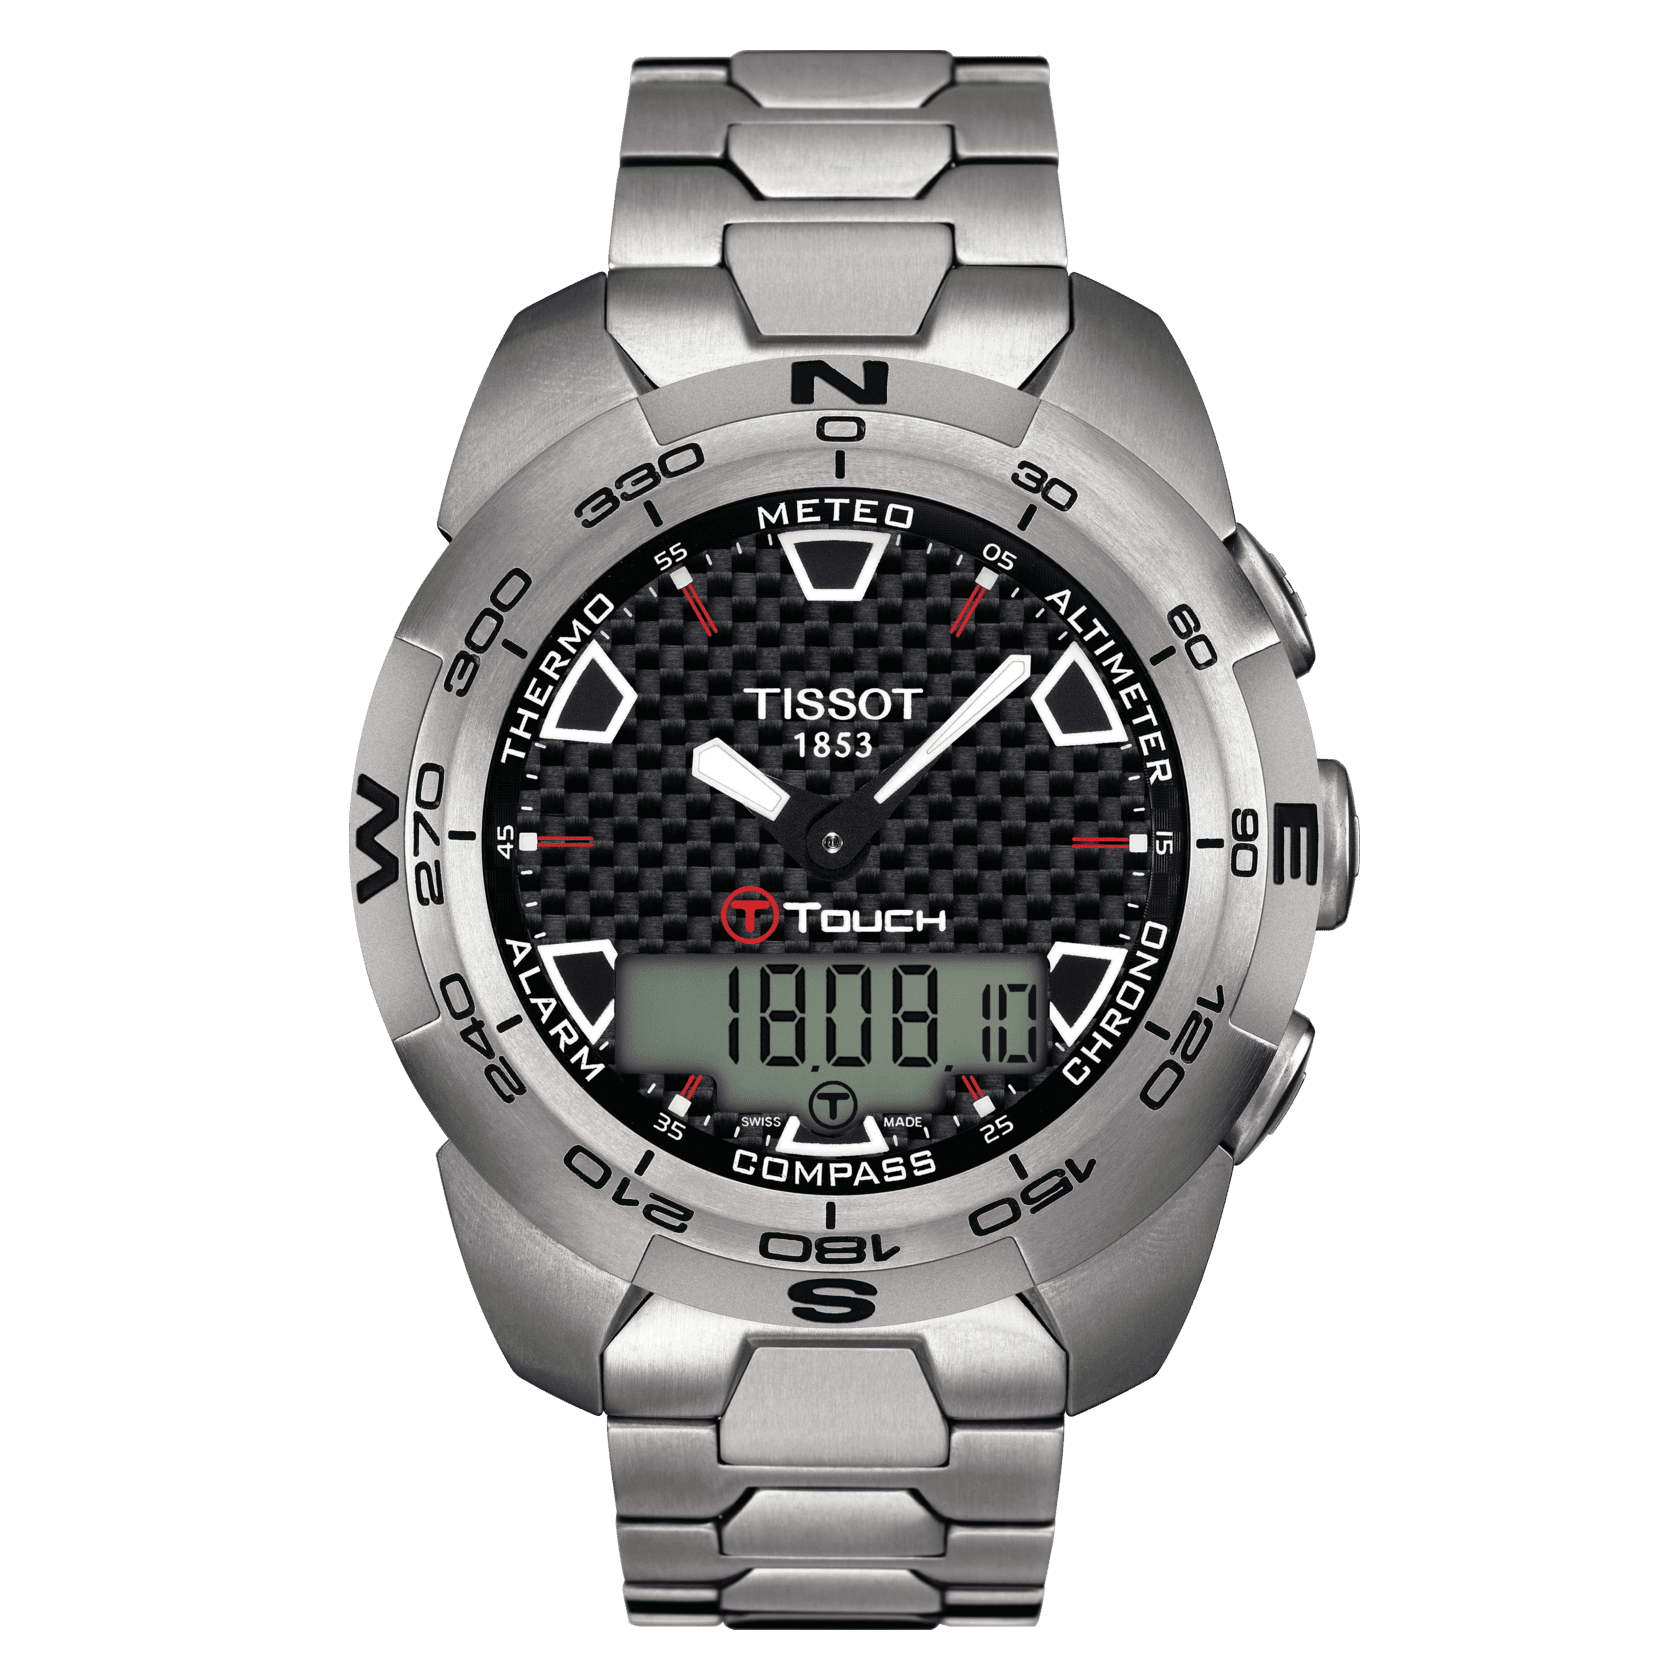 Swiss Made Replica Watches Usa